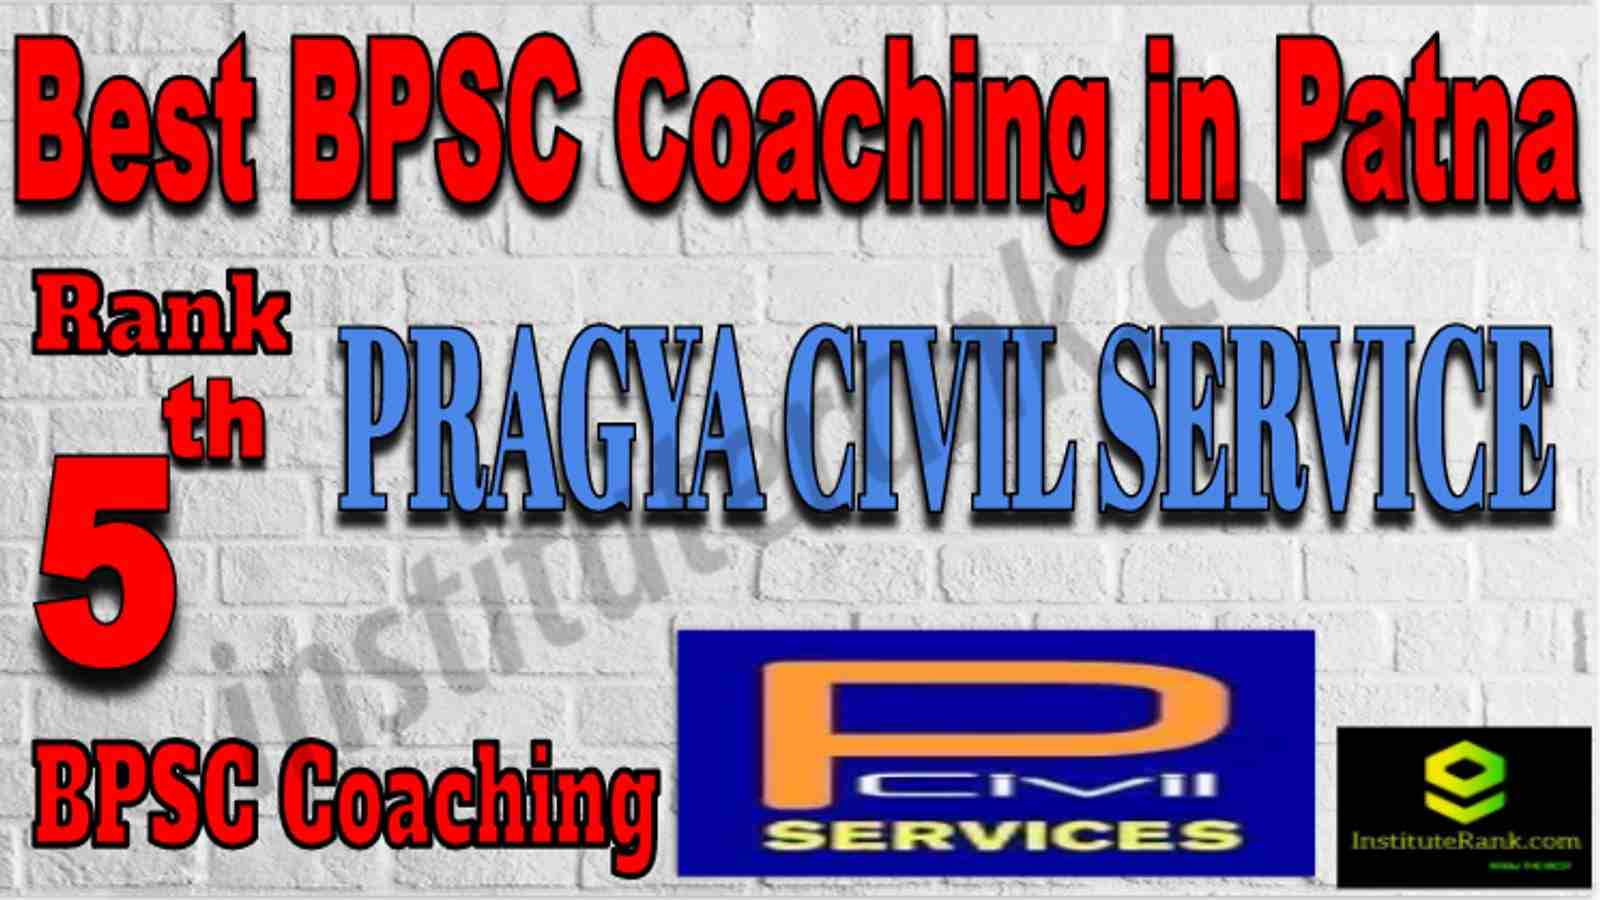 Rank 5 Best BPSC Coaching in Patna